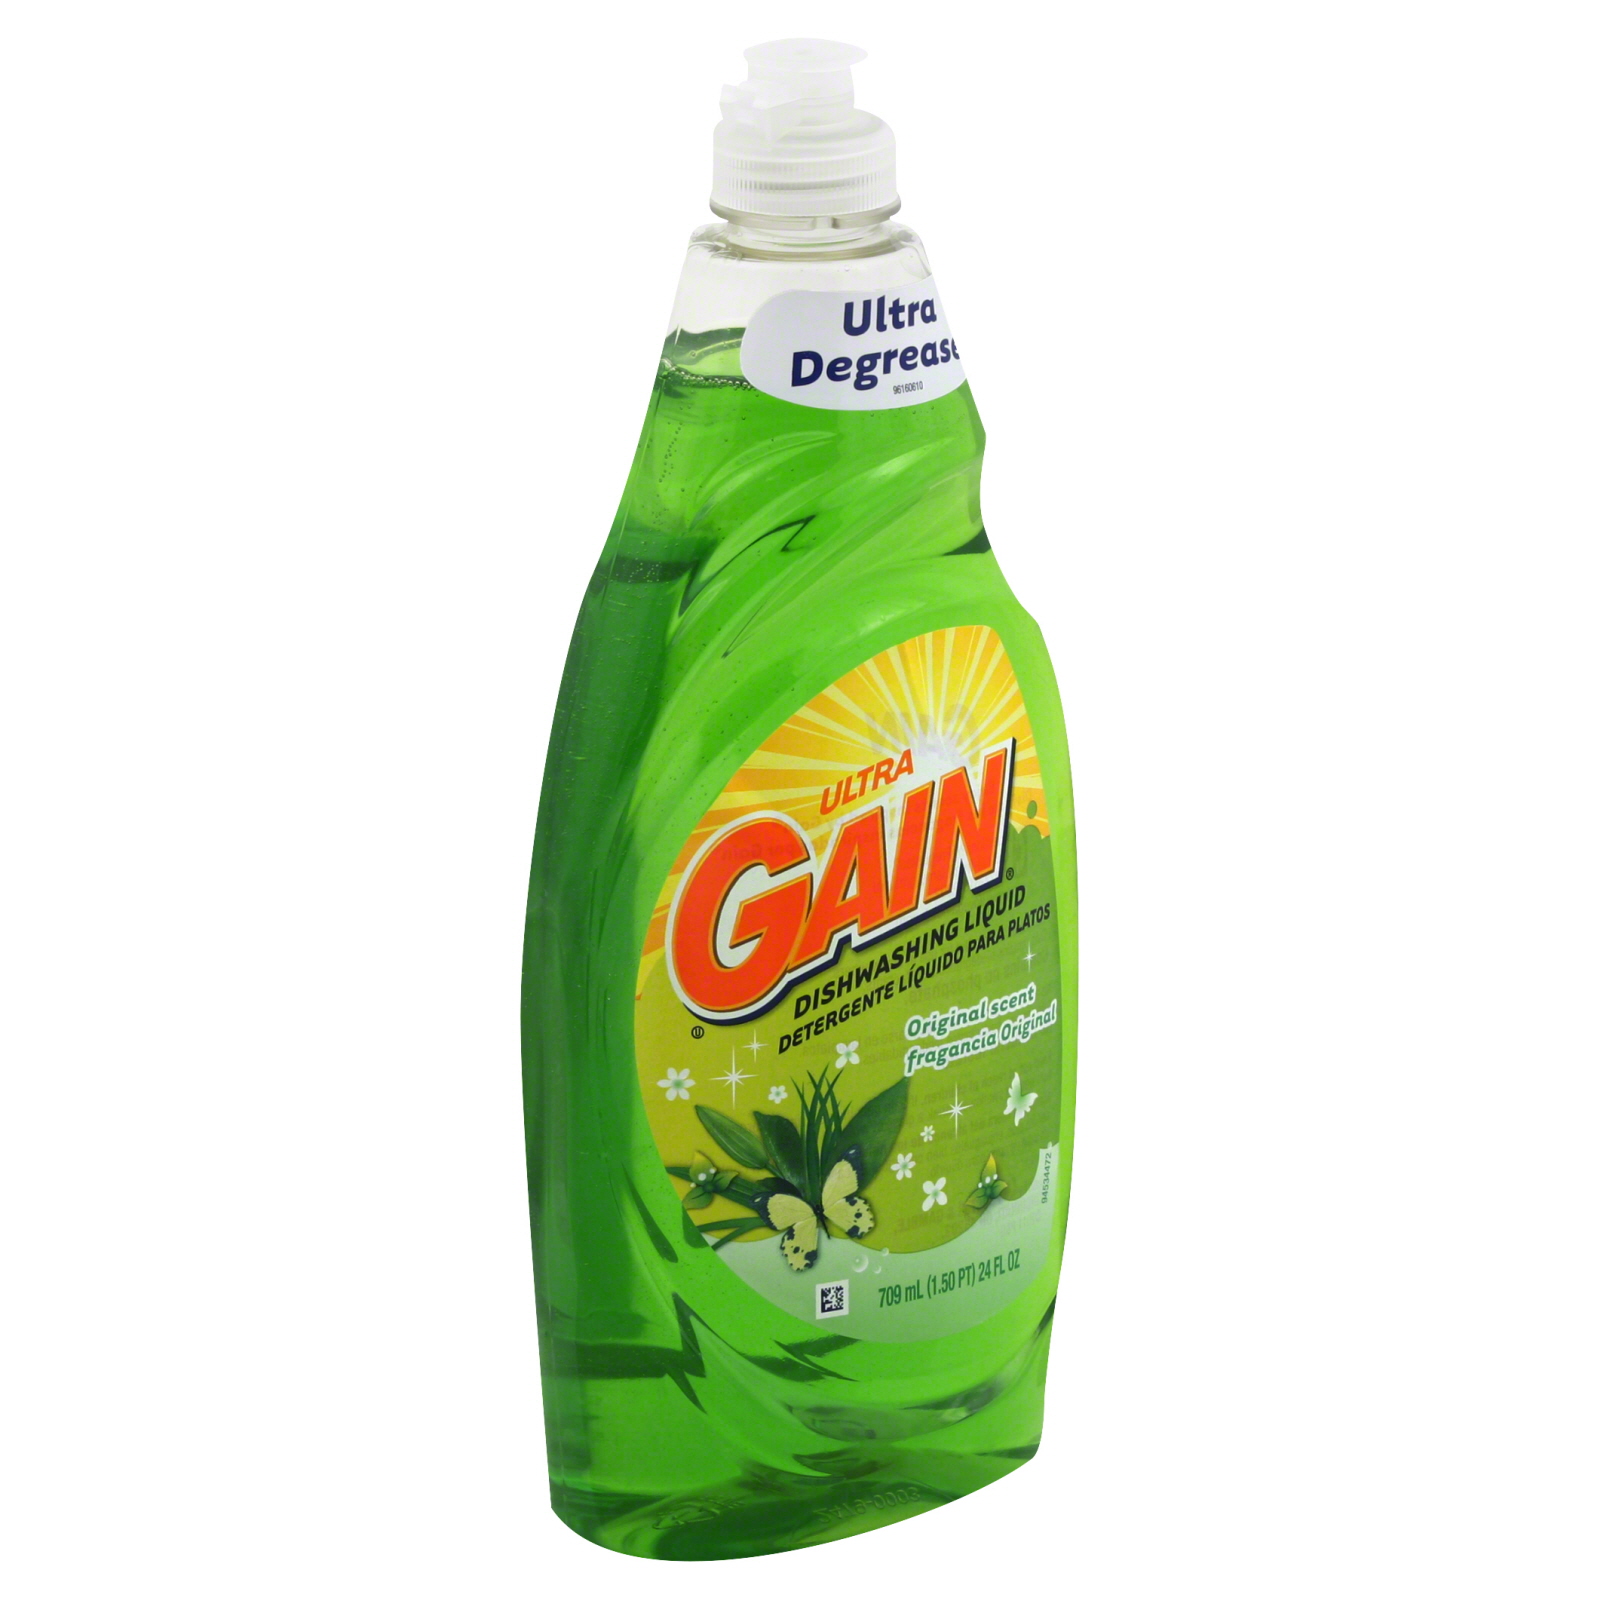 Gain Ultra, Dish-washing Liquid, Original Scent, 24 fl oz 709 ml